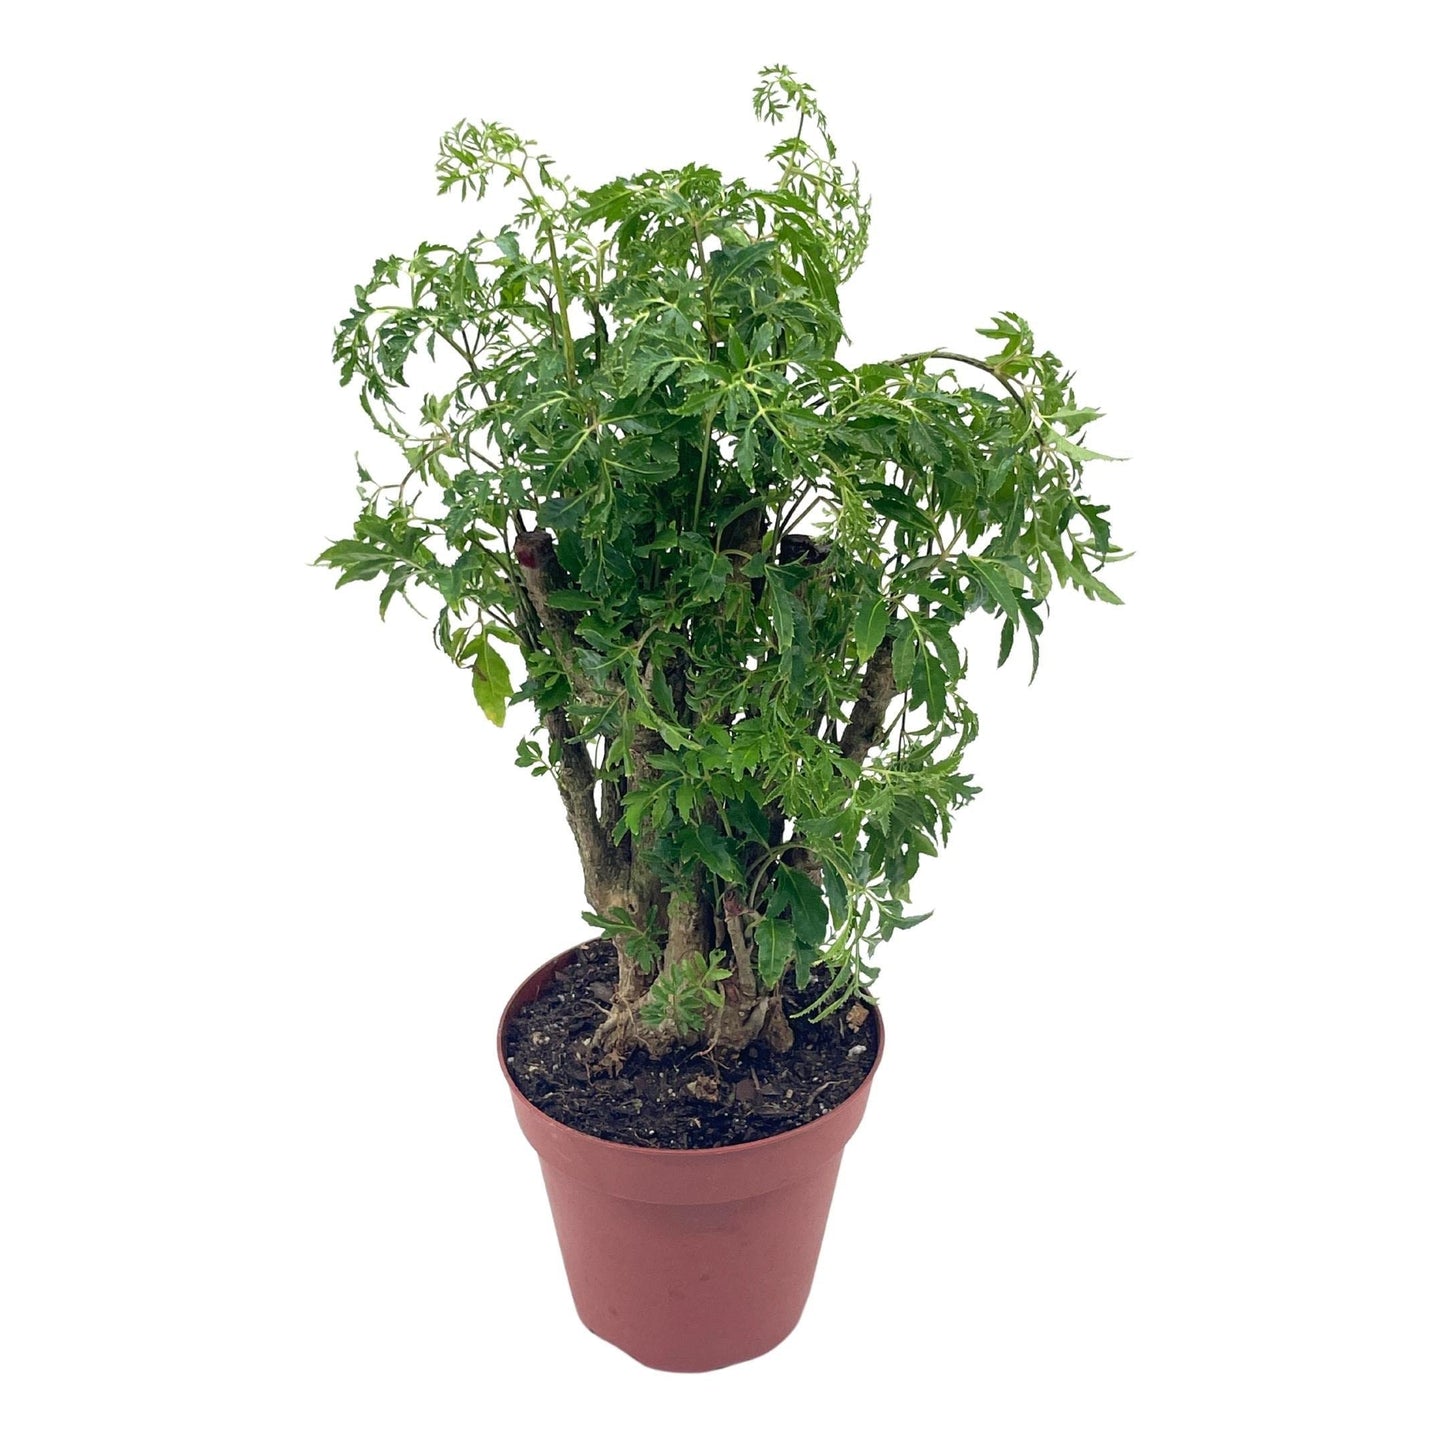 Aralia Ming Stump Plant, Polyscias fruticosa, 4 inch Pot, Live Evergreen Shrub Tree-Like Bonsai